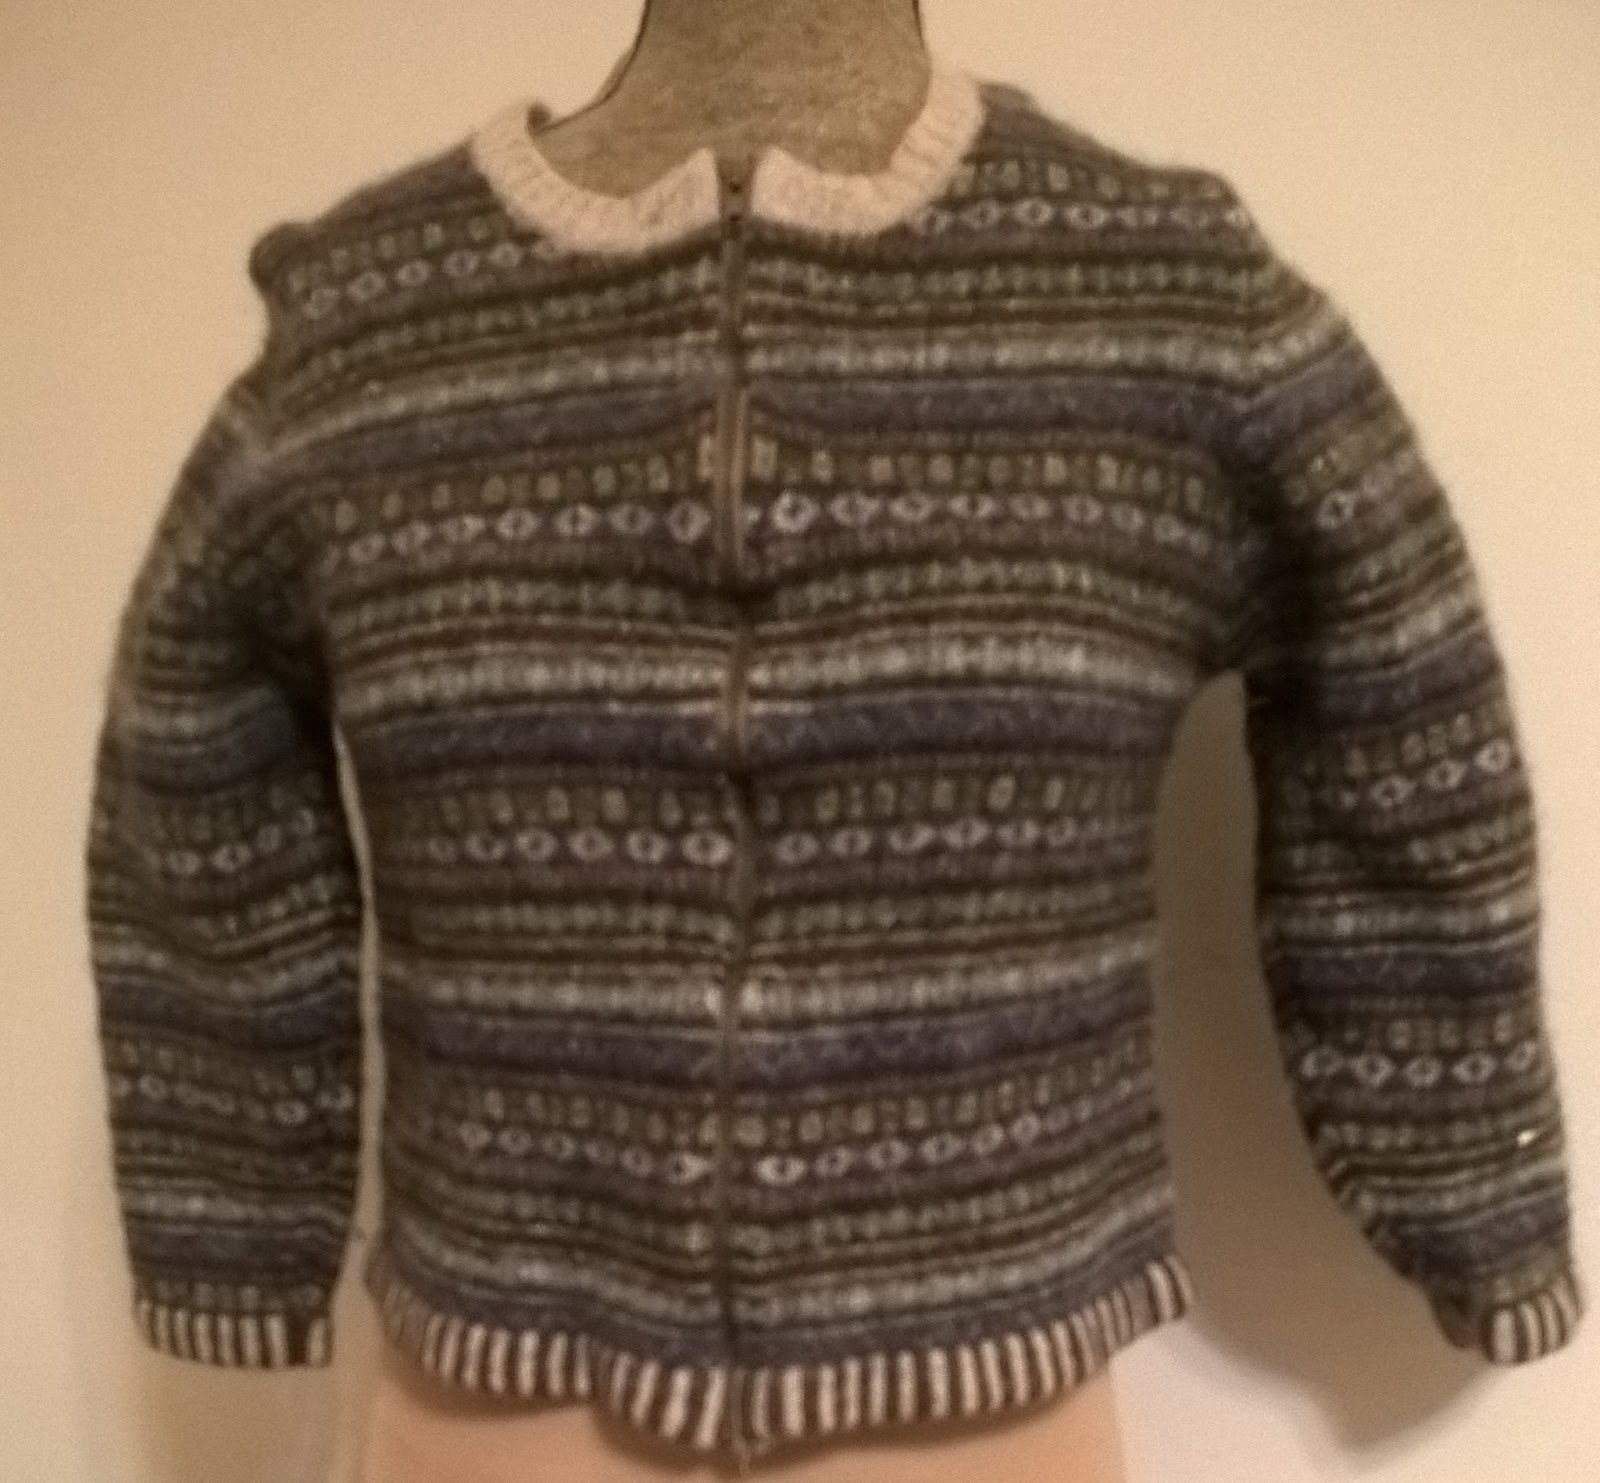 Refashion Co-op: Save the Shrunken Sweater; Make Mittens!